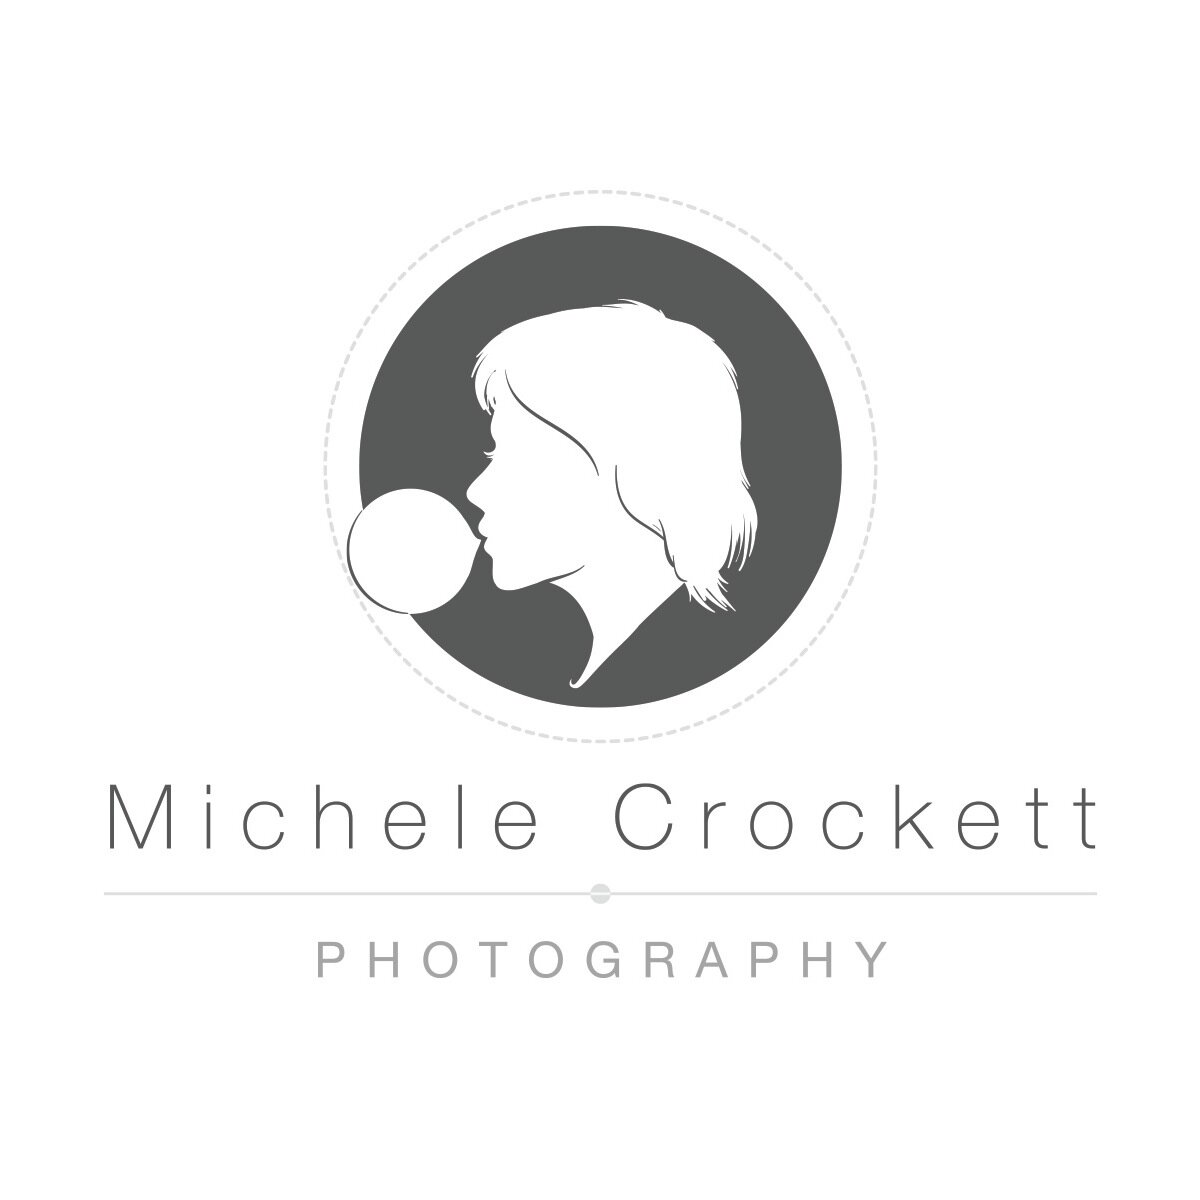 Michele Crockett Photography creates art out of portraiture.